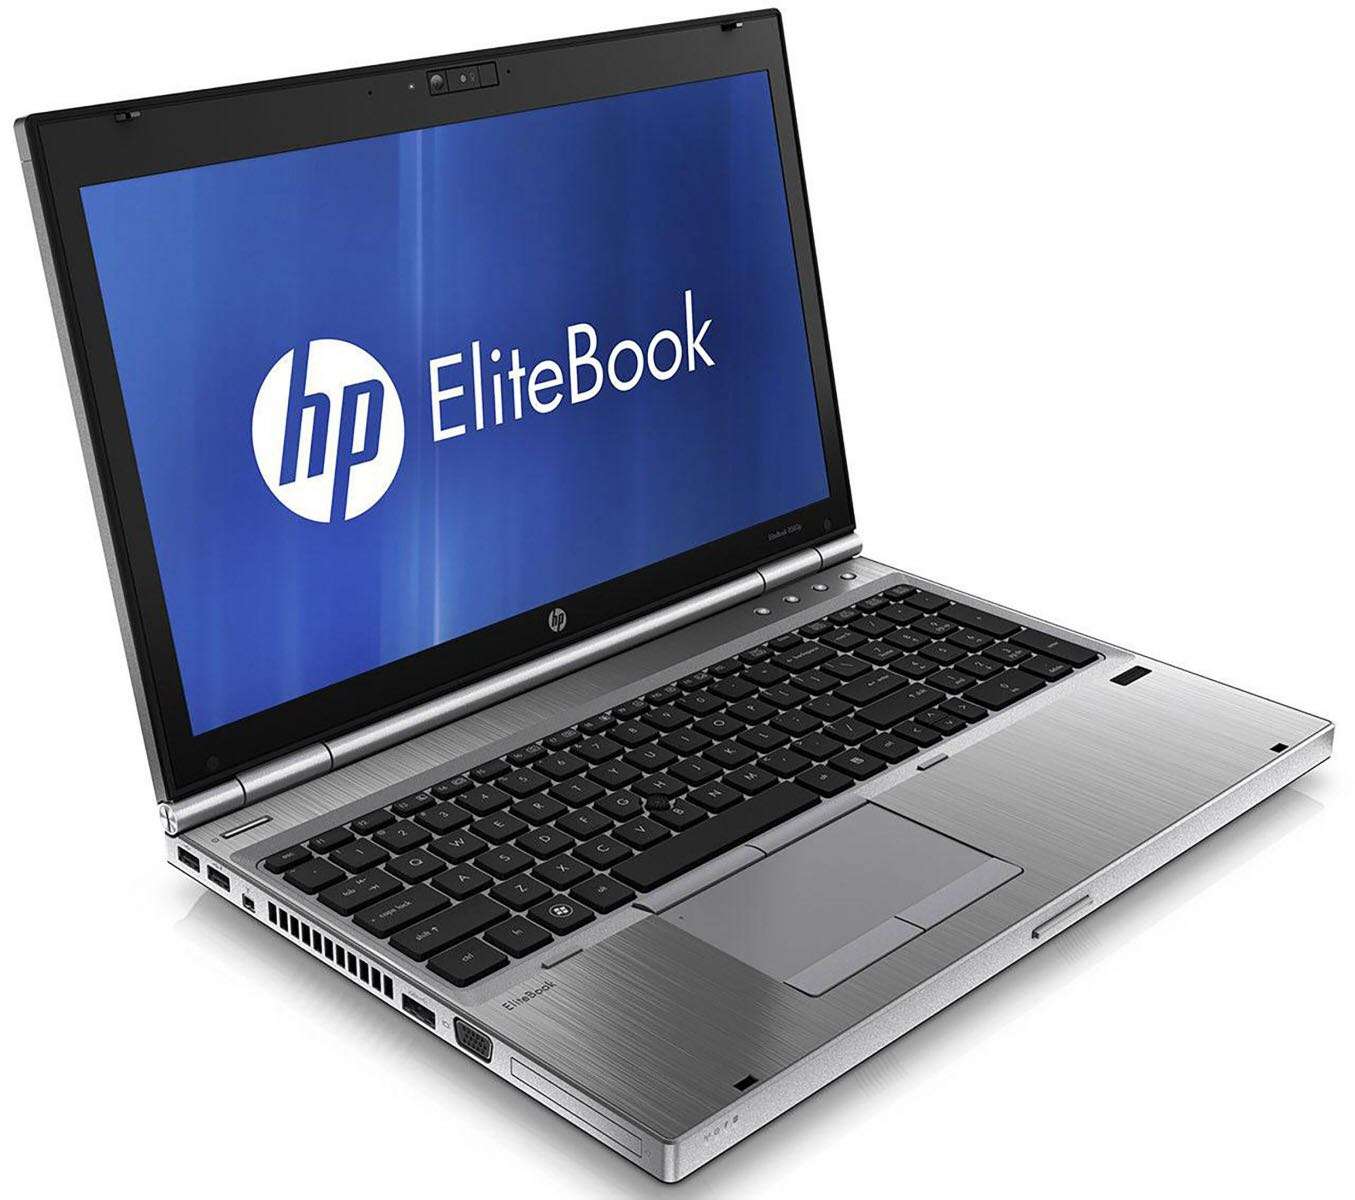 HP EliteBook 8570p (Core i7-3520M, RAM 4GB, HDD 320GB, VGA 1GB ATI Radeon HD 7570M, 15.6 inch)